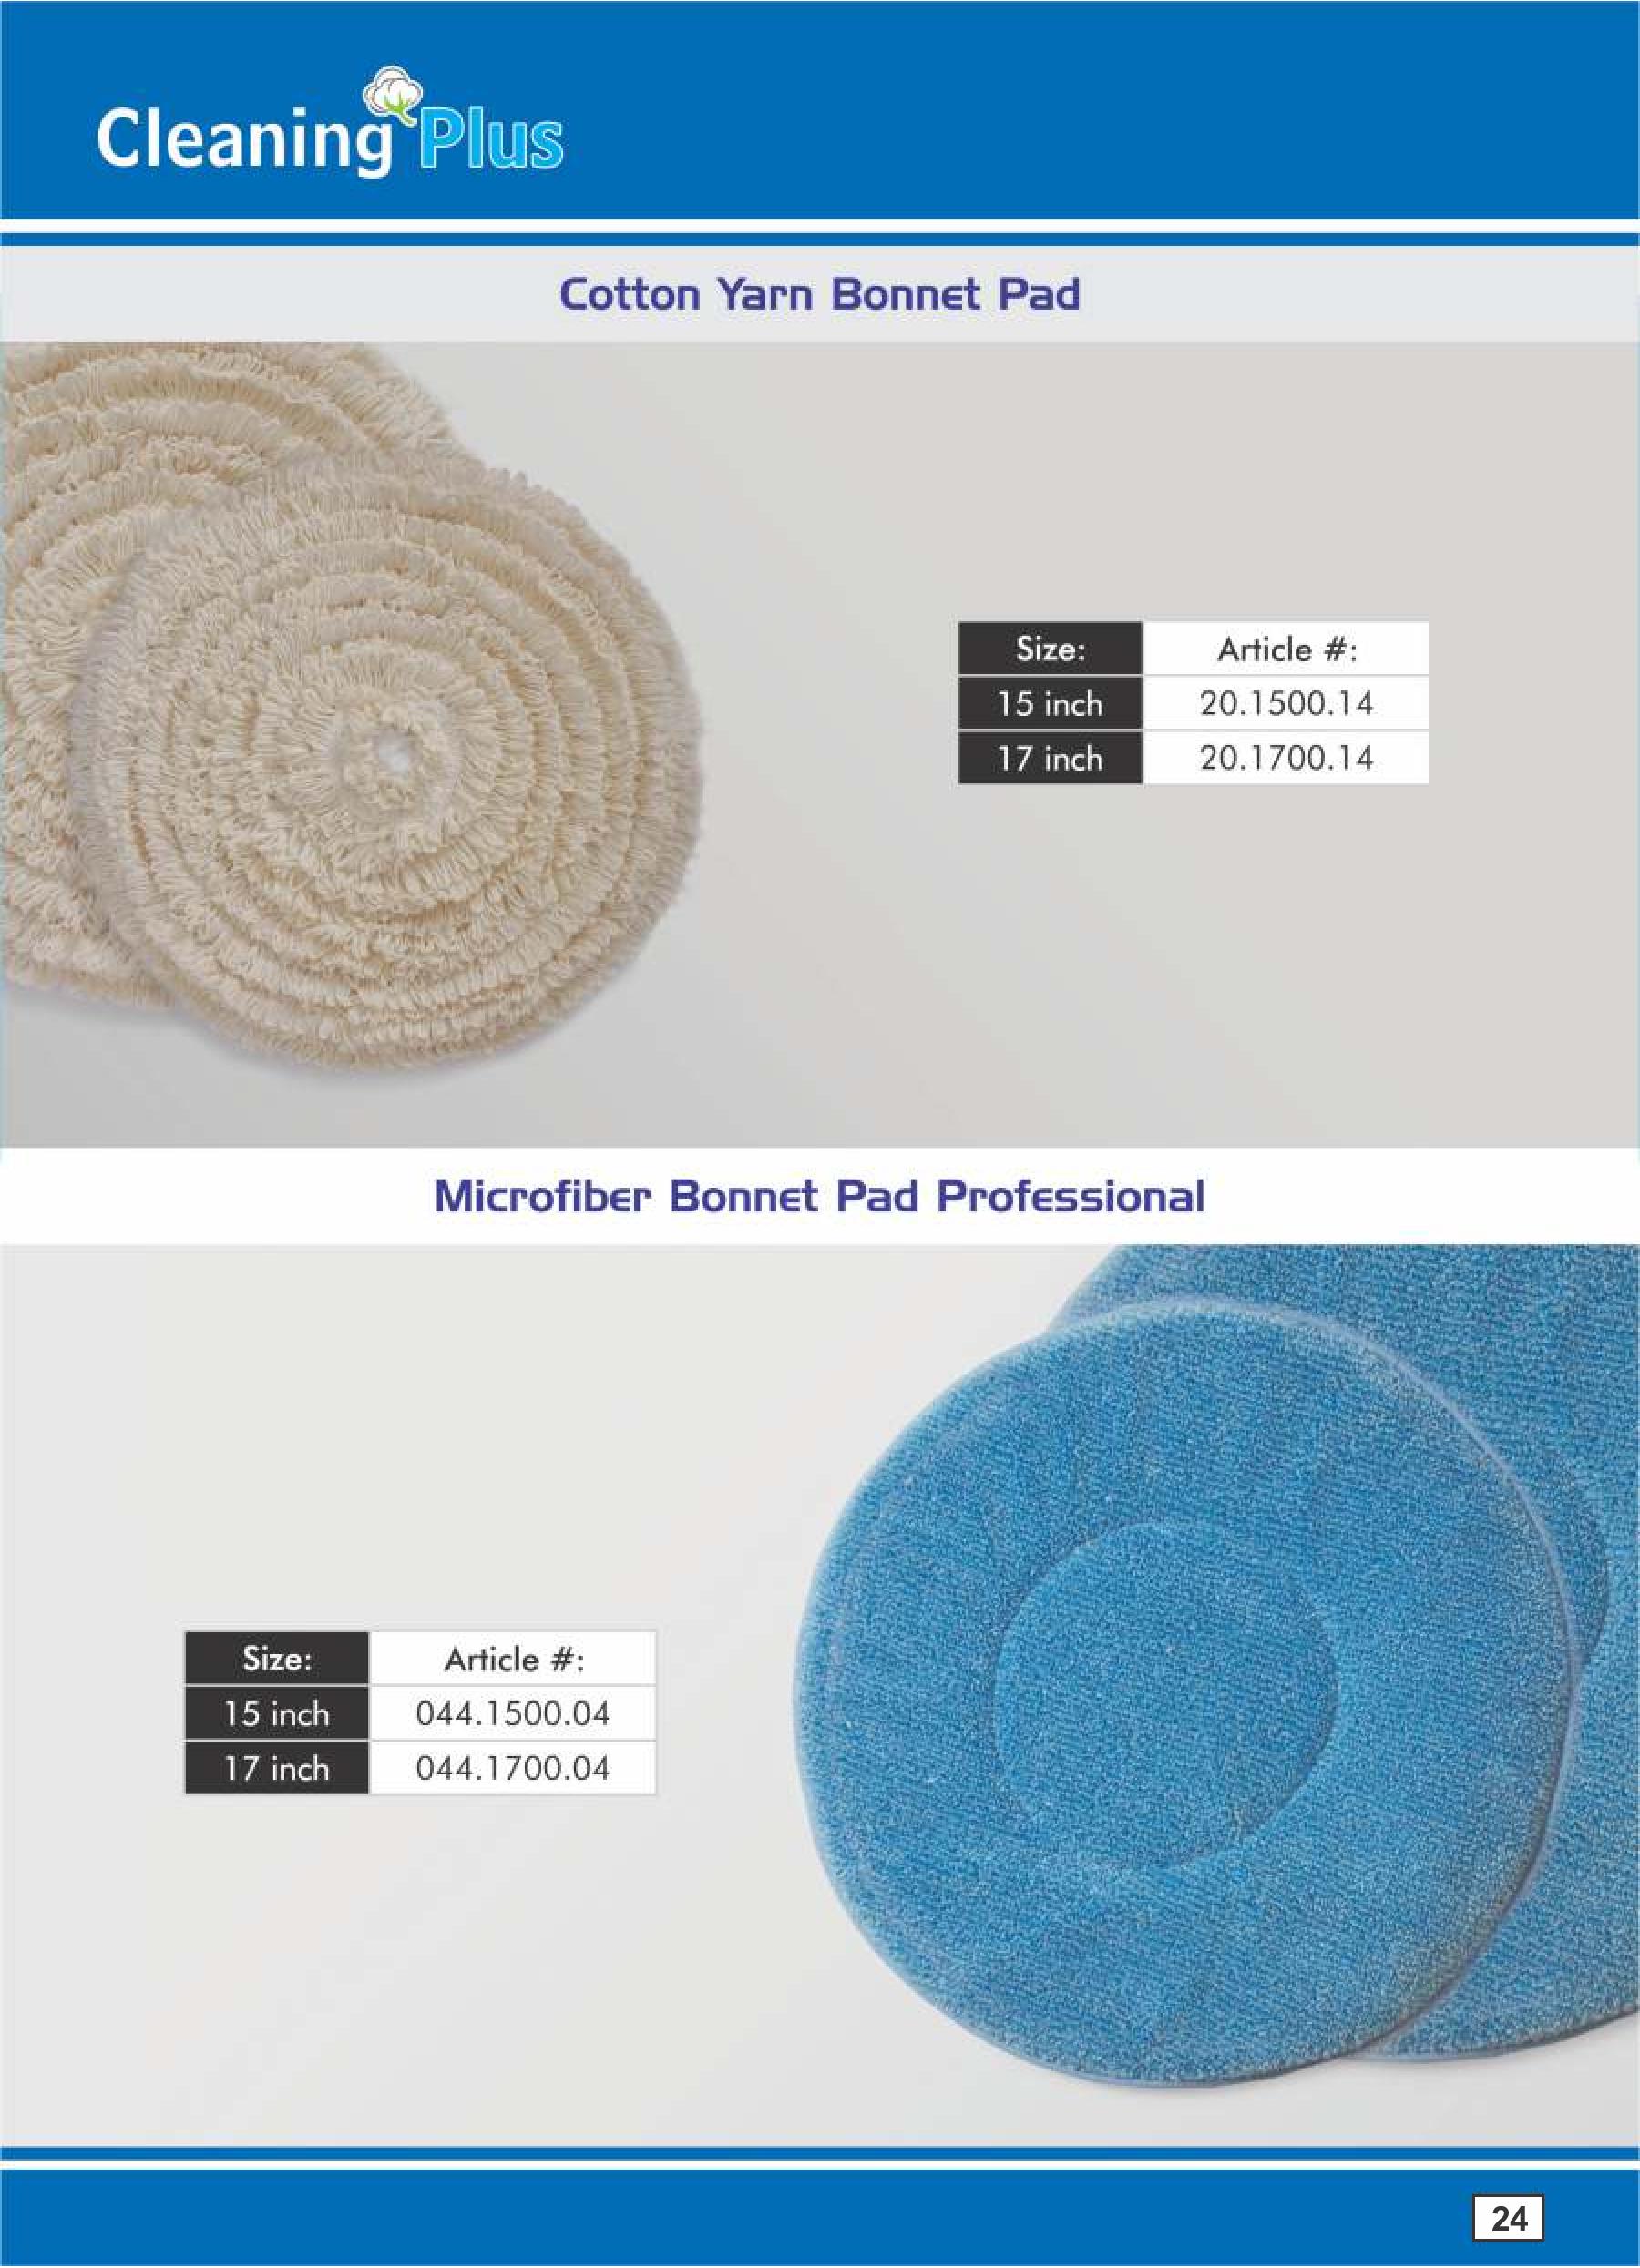 Bonet pads cotton and Microfiber